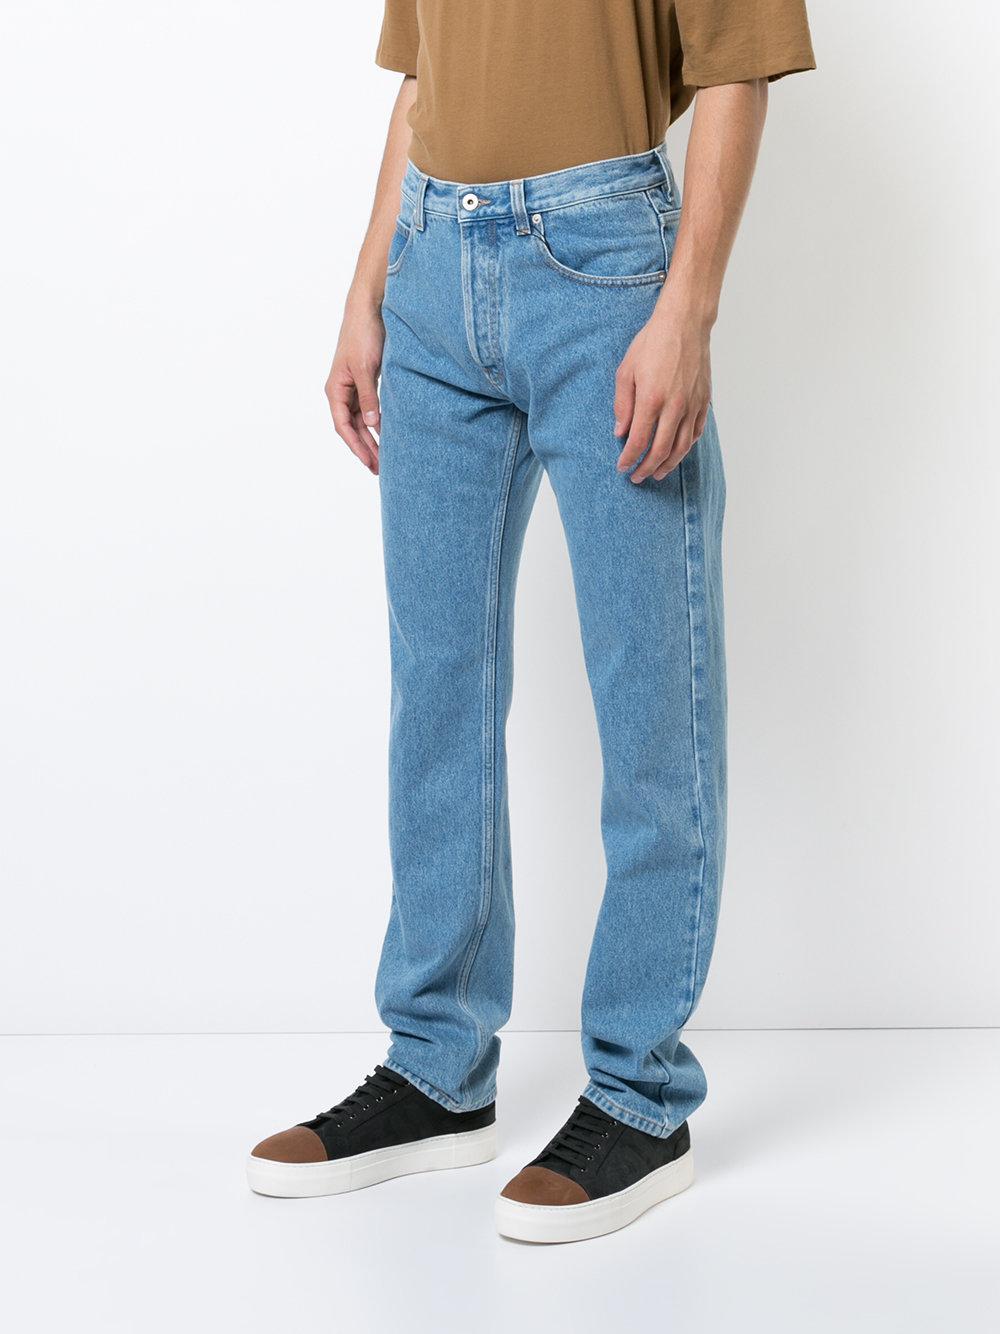 Loewe Denim Regular Long Jeans in Blue for Men - Lyst